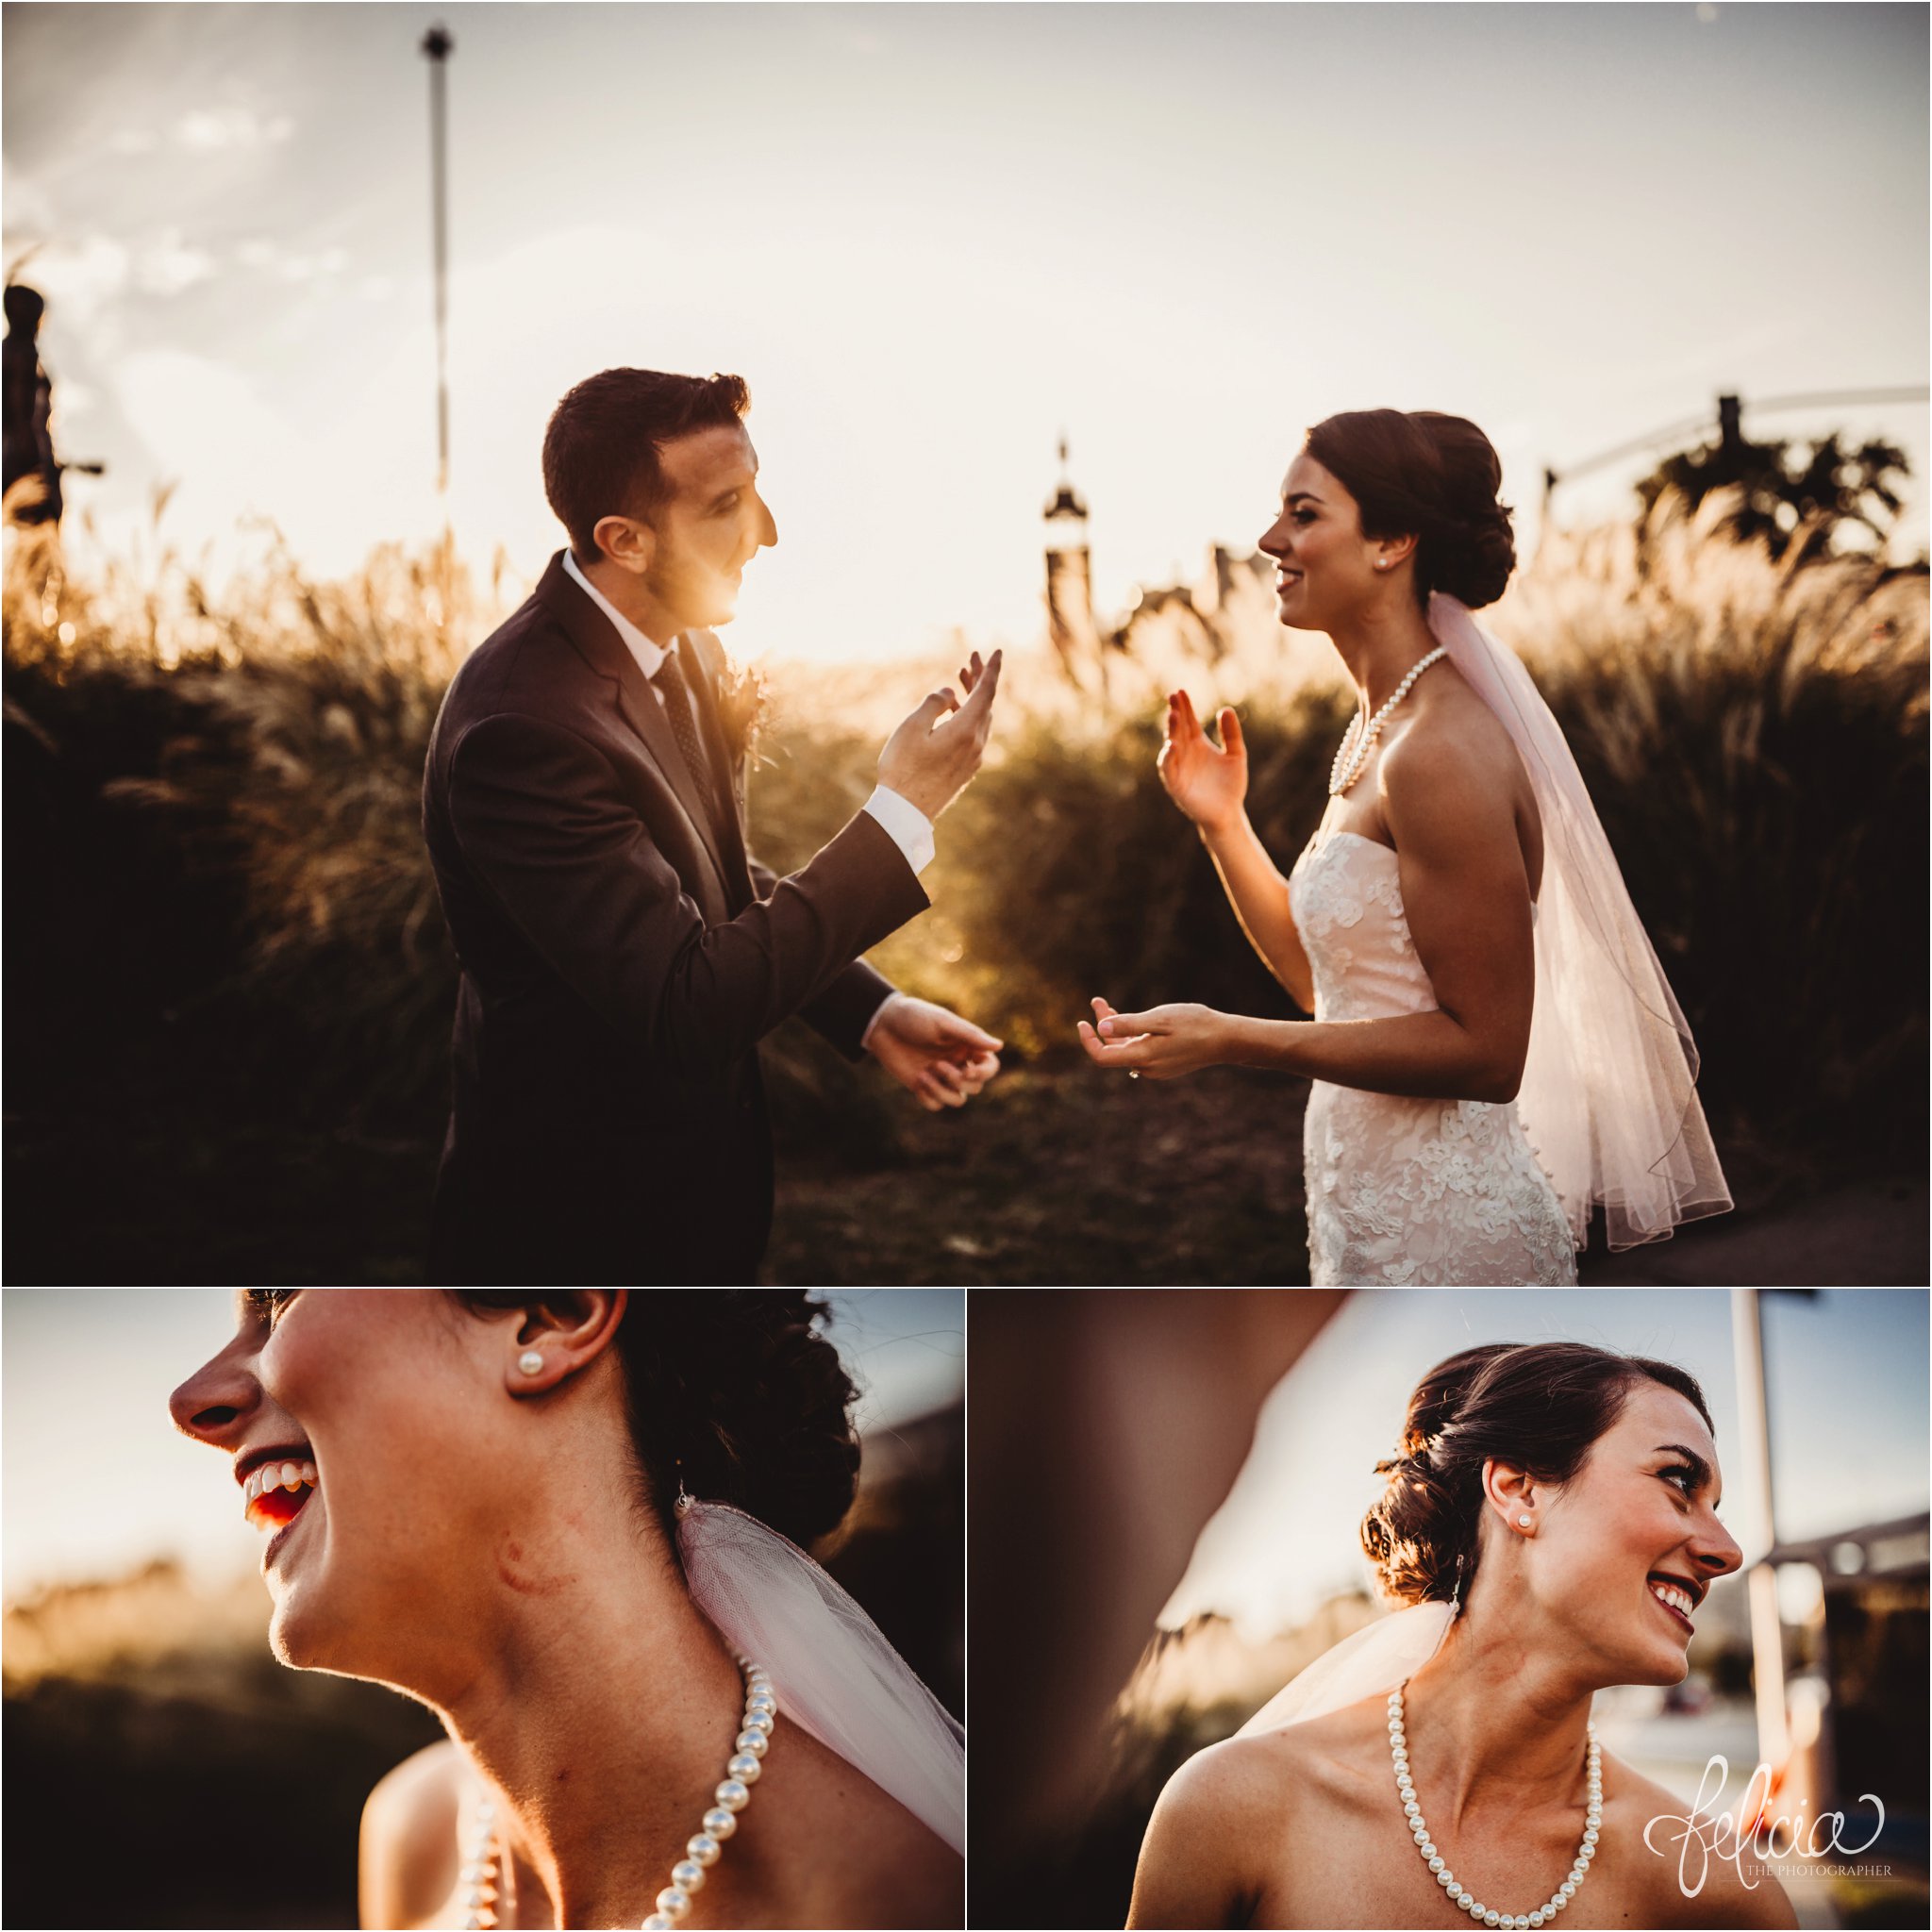 images by feliciathephotographer.com | wedding photographer | kansas city | lip stick | laughter | plaza | wheat | pearls | emily hart | the black tux | 